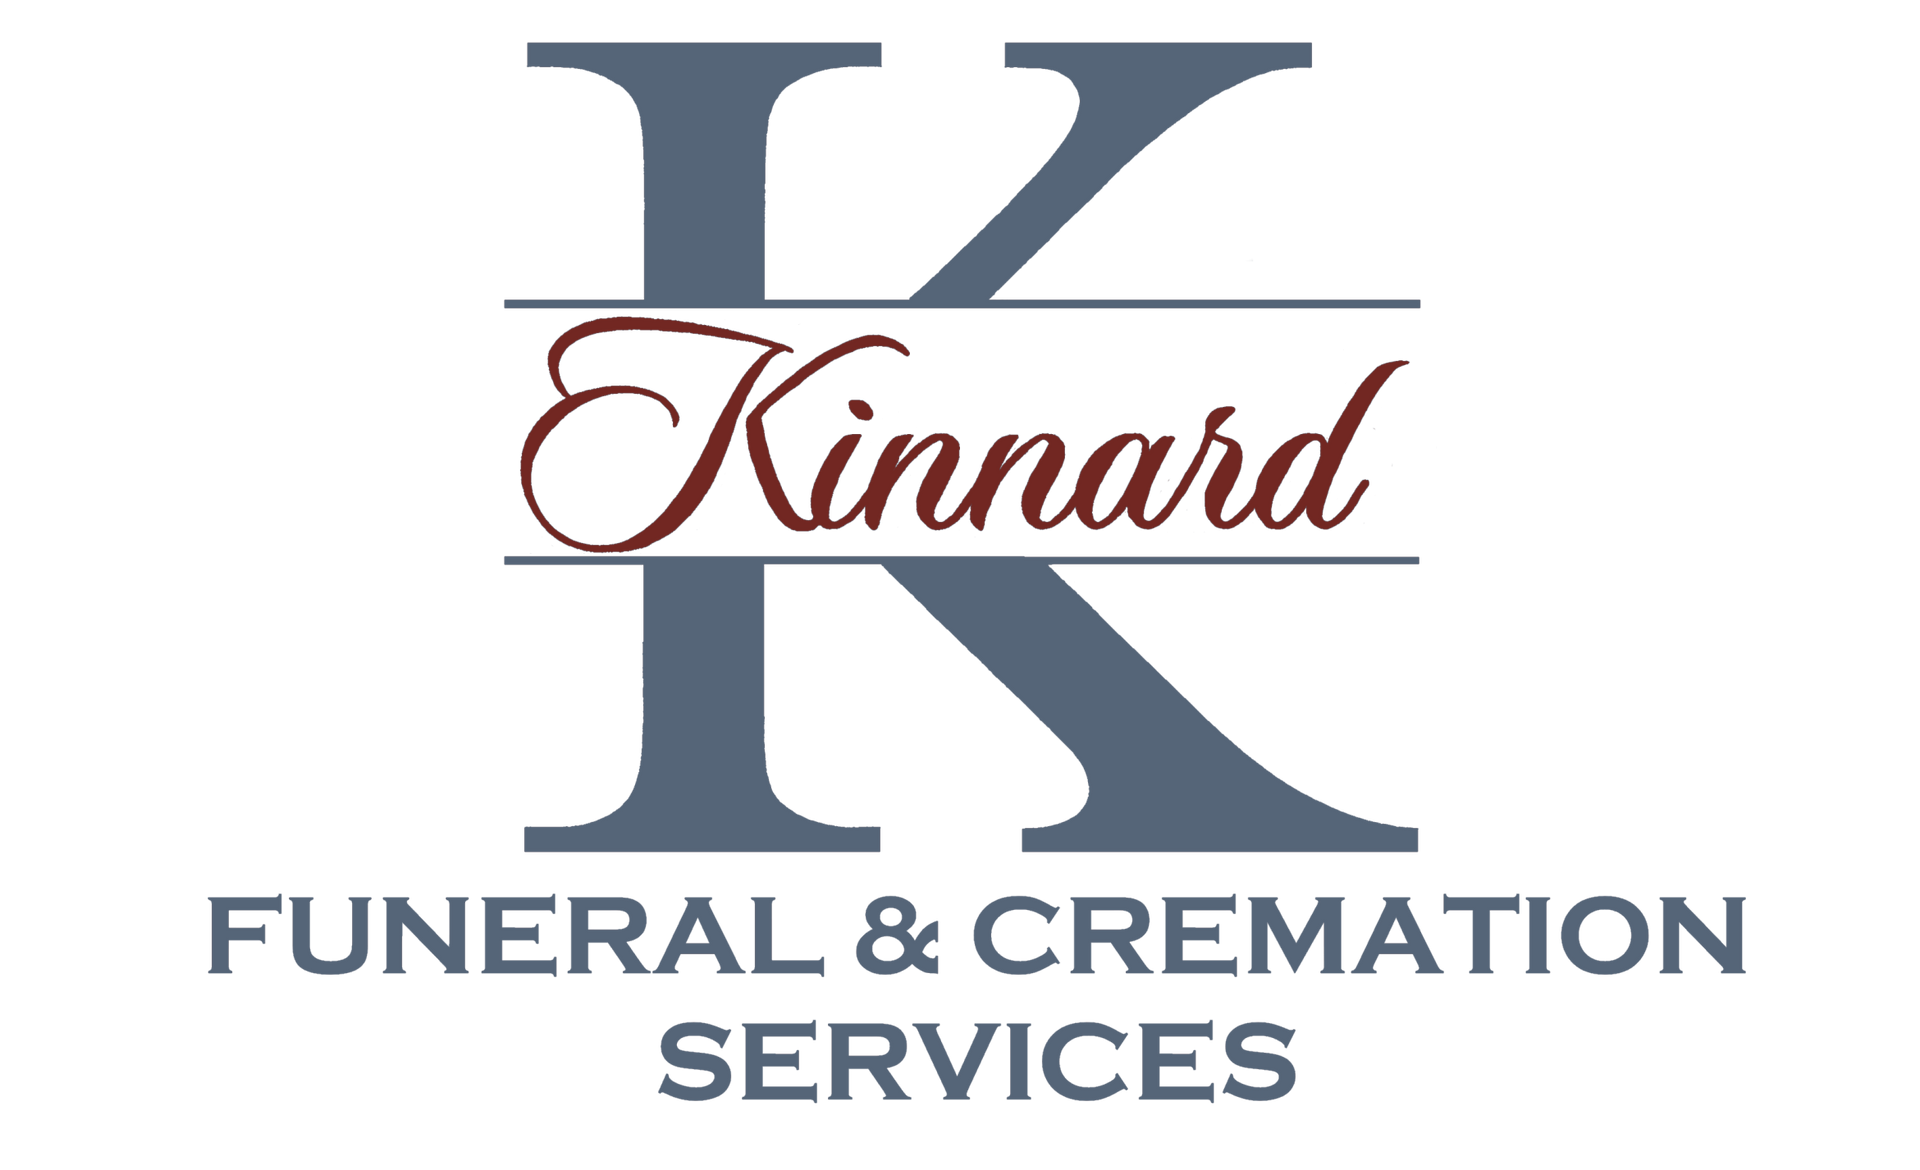 Most Recent Obituaries | Kinnard Funeral & Cremation Services